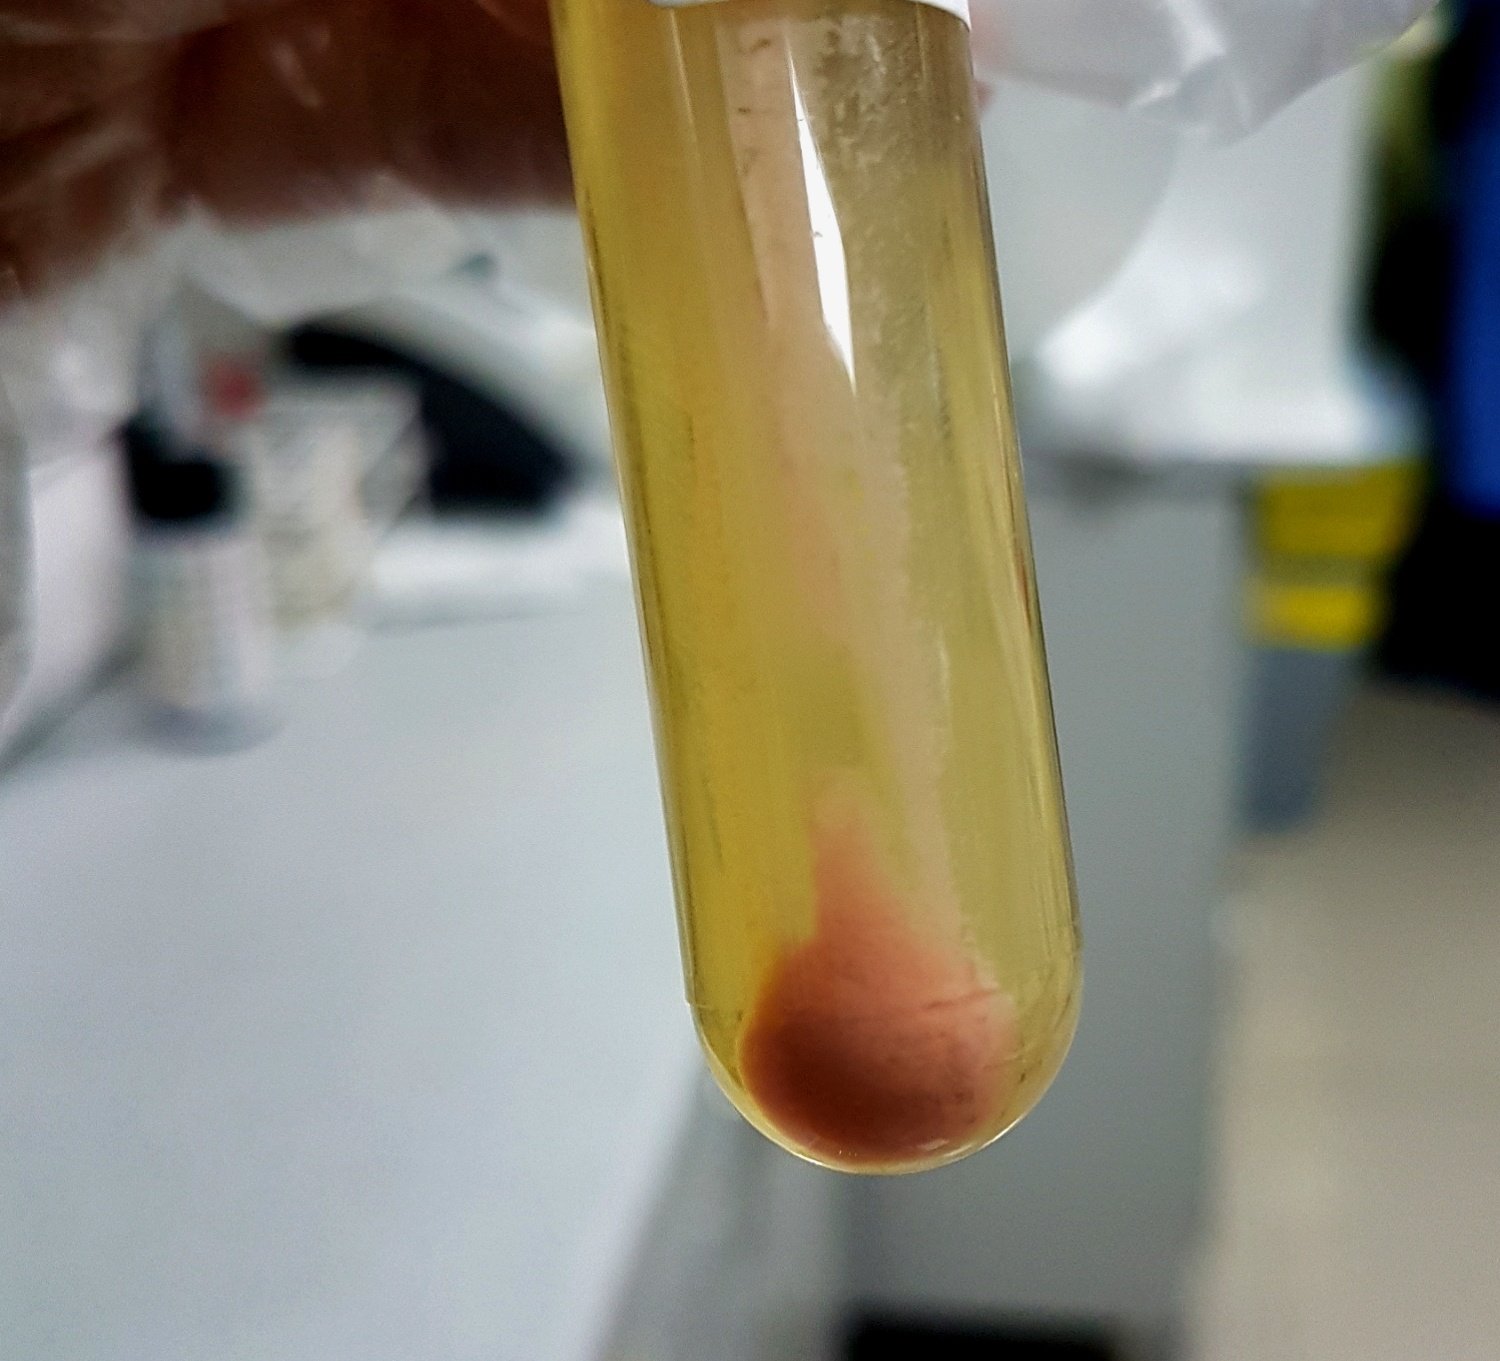 amorphous urates in urine